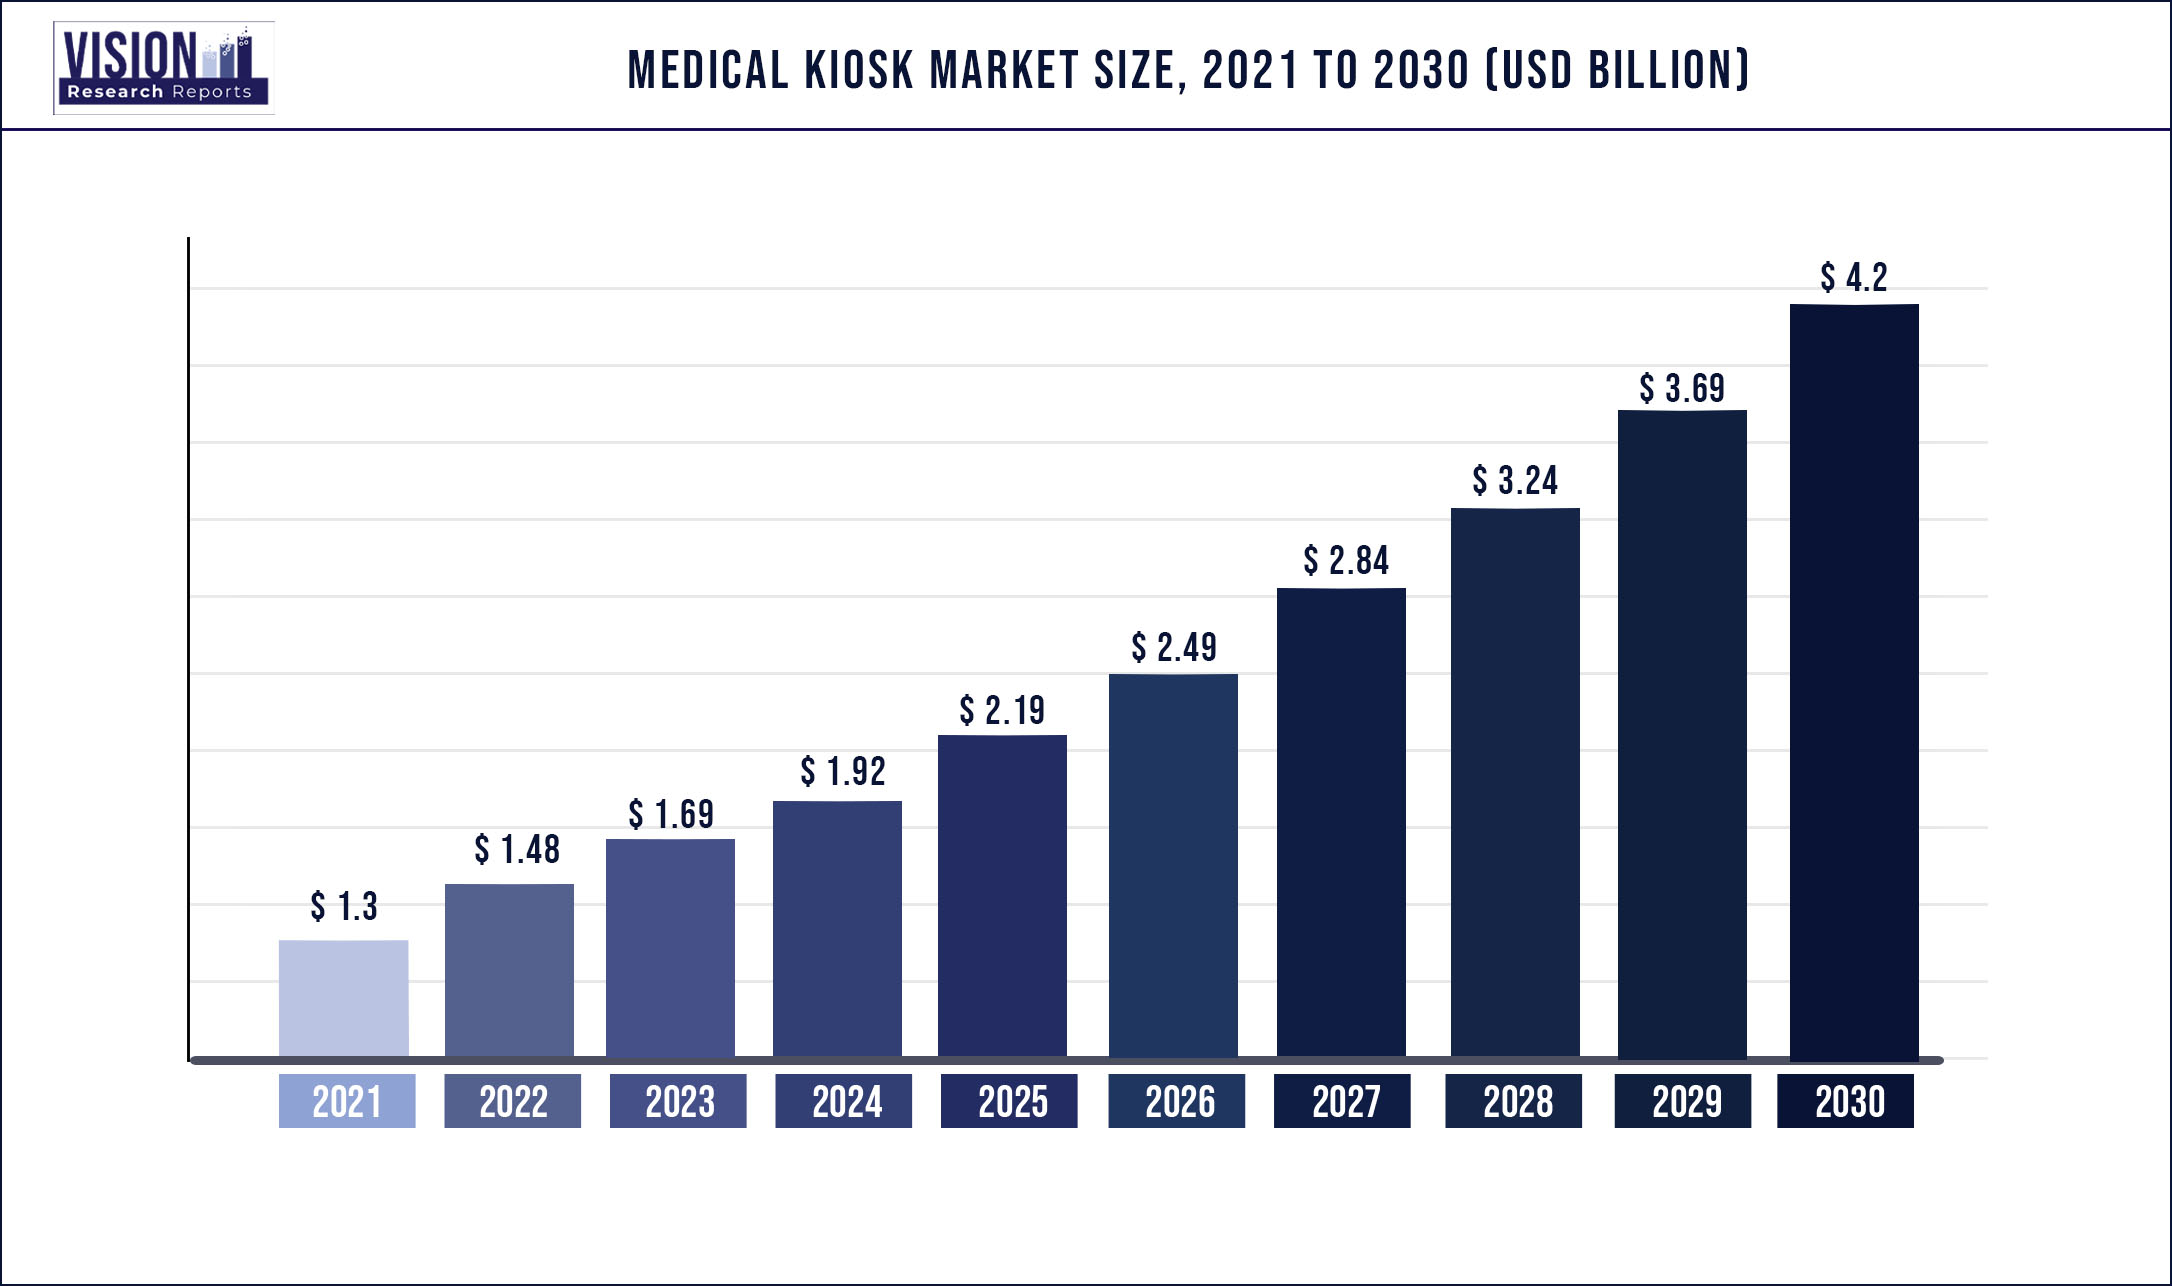 Medical Kiosk Market Size 2021 to 2030